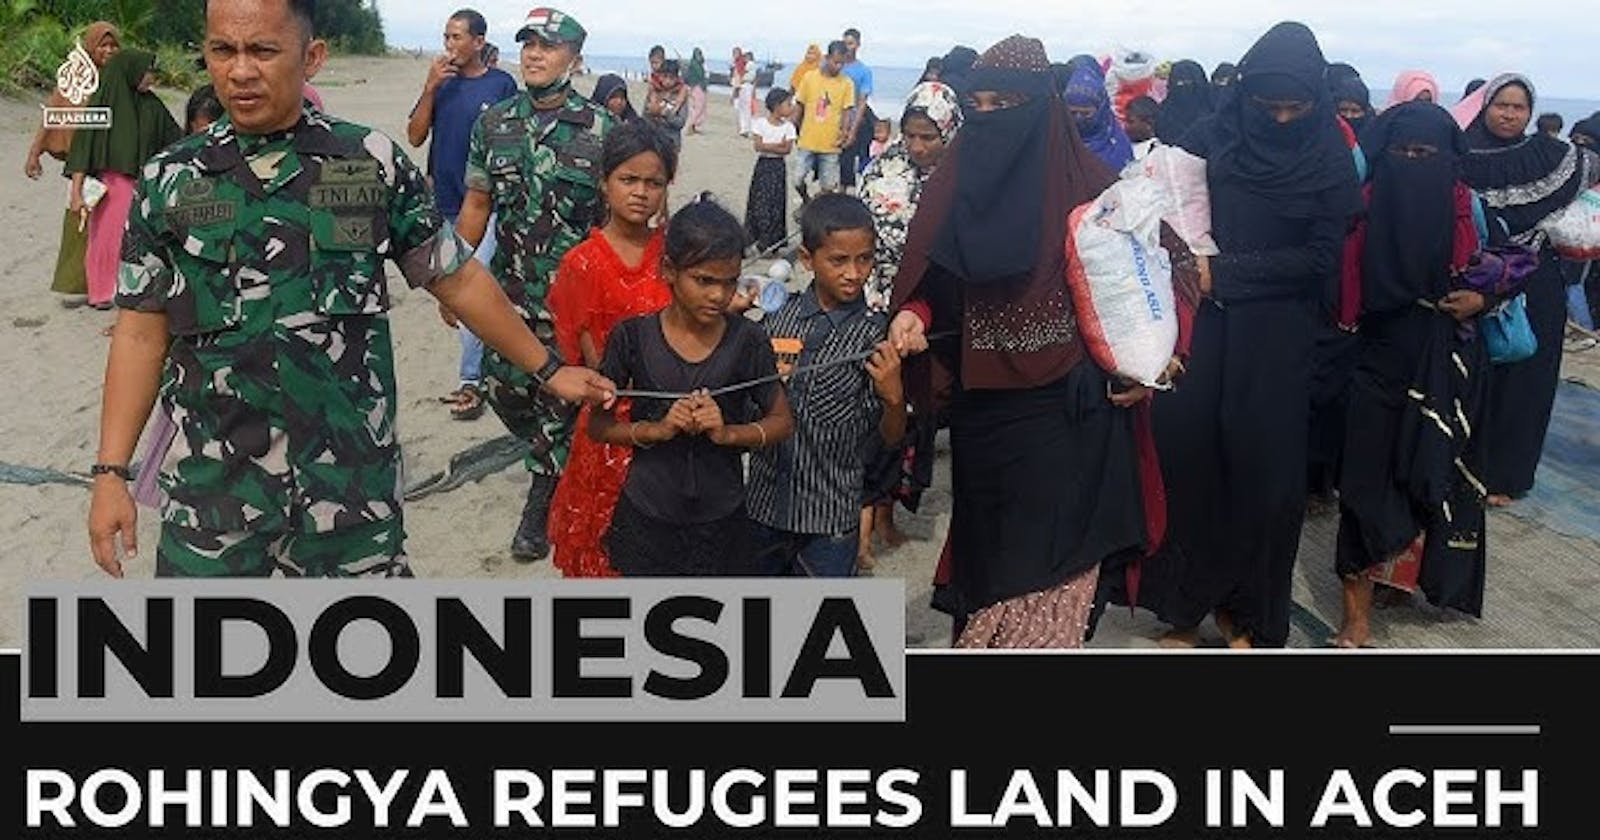 Anti-Rohingya protesters storm Indonesia refugee shelter demanding deportation